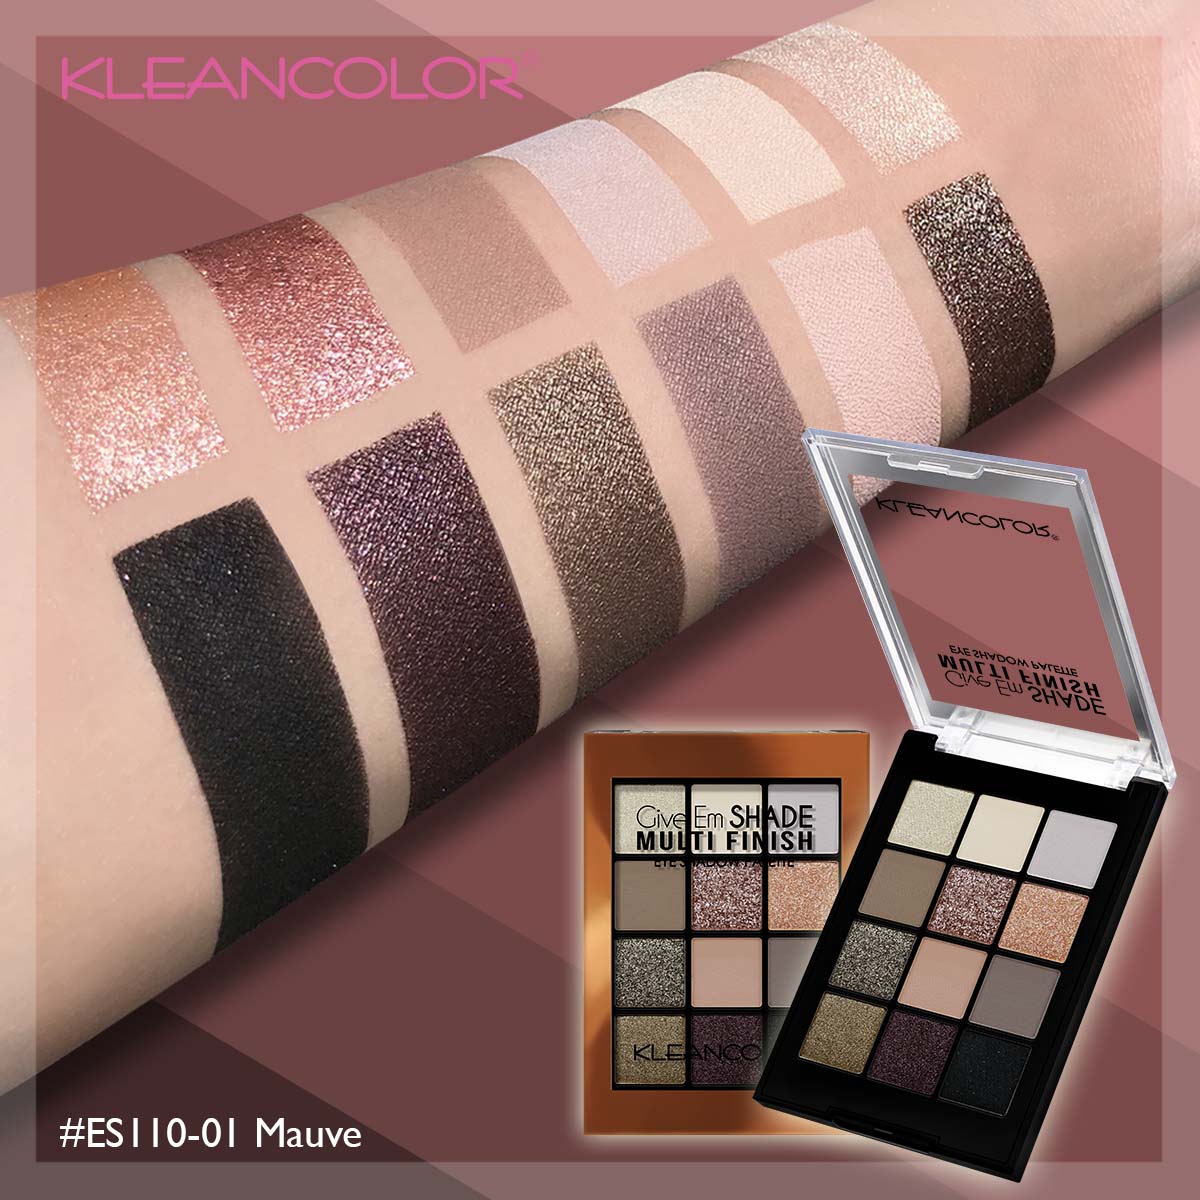 Kleancolor - Give Em Shade Palette Mauve